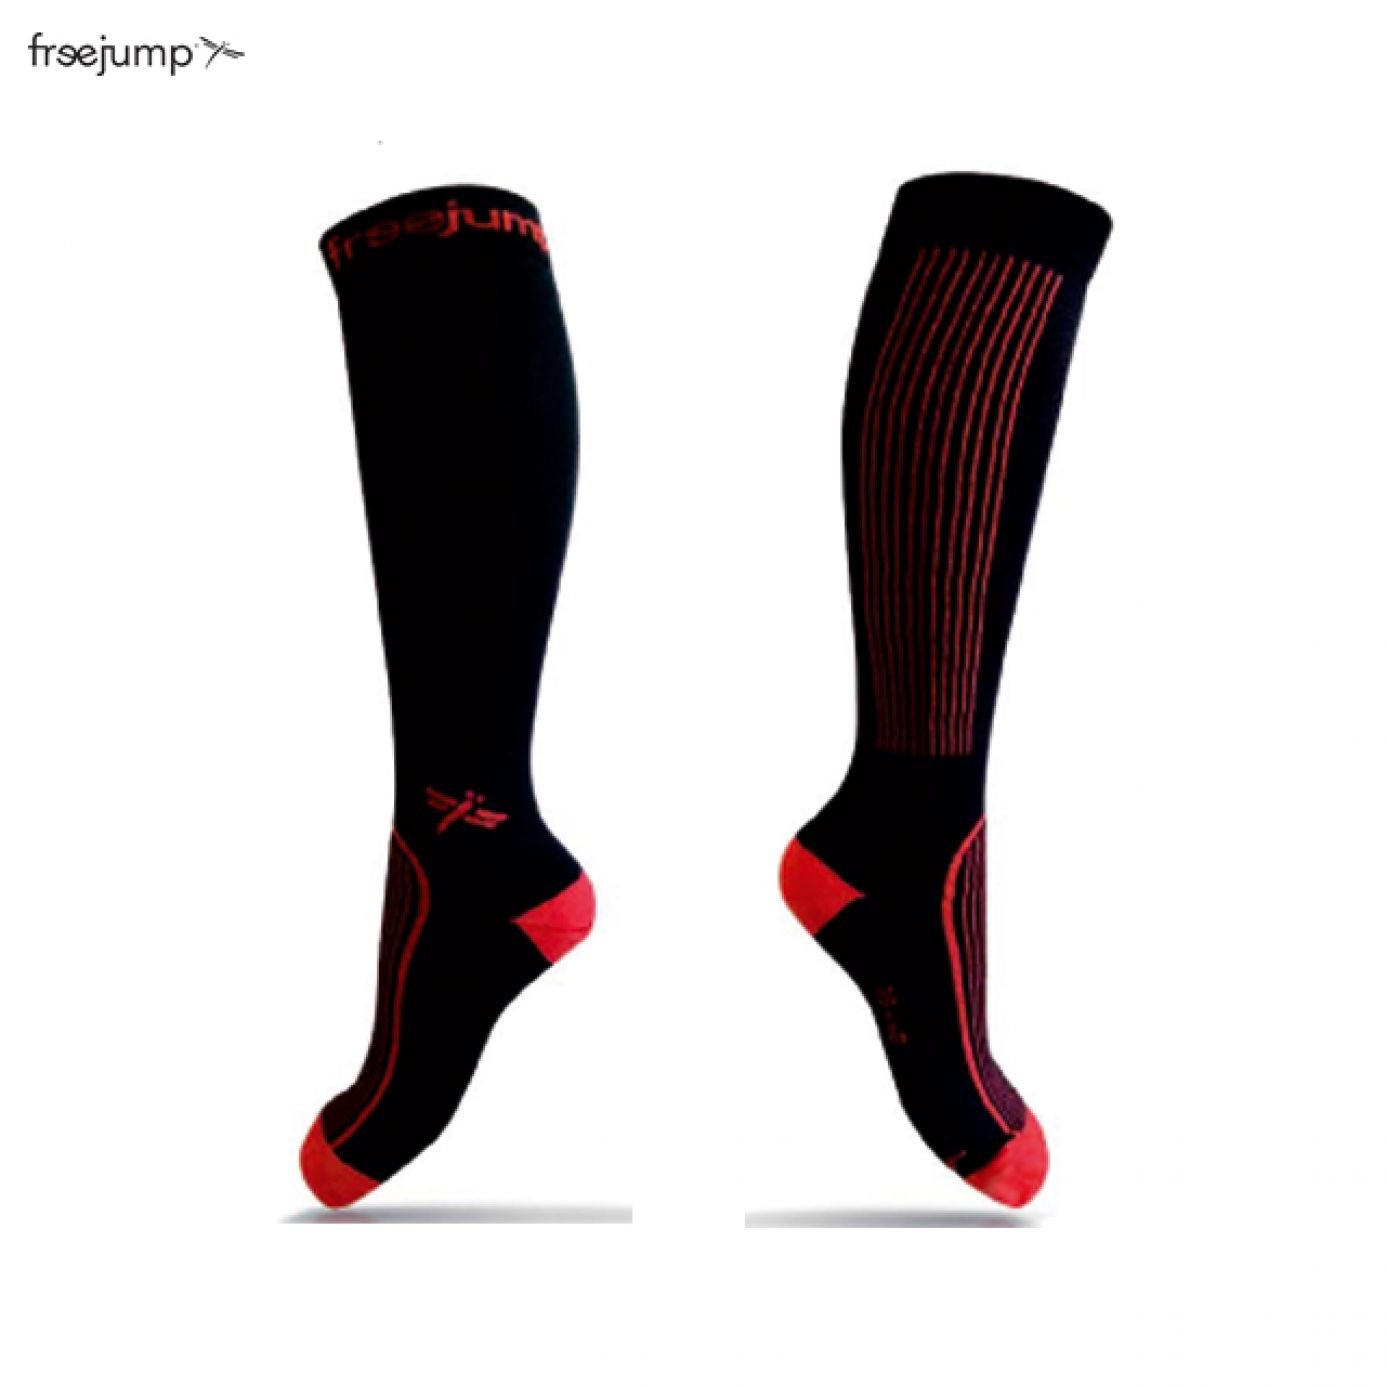 Freejump Technical socks